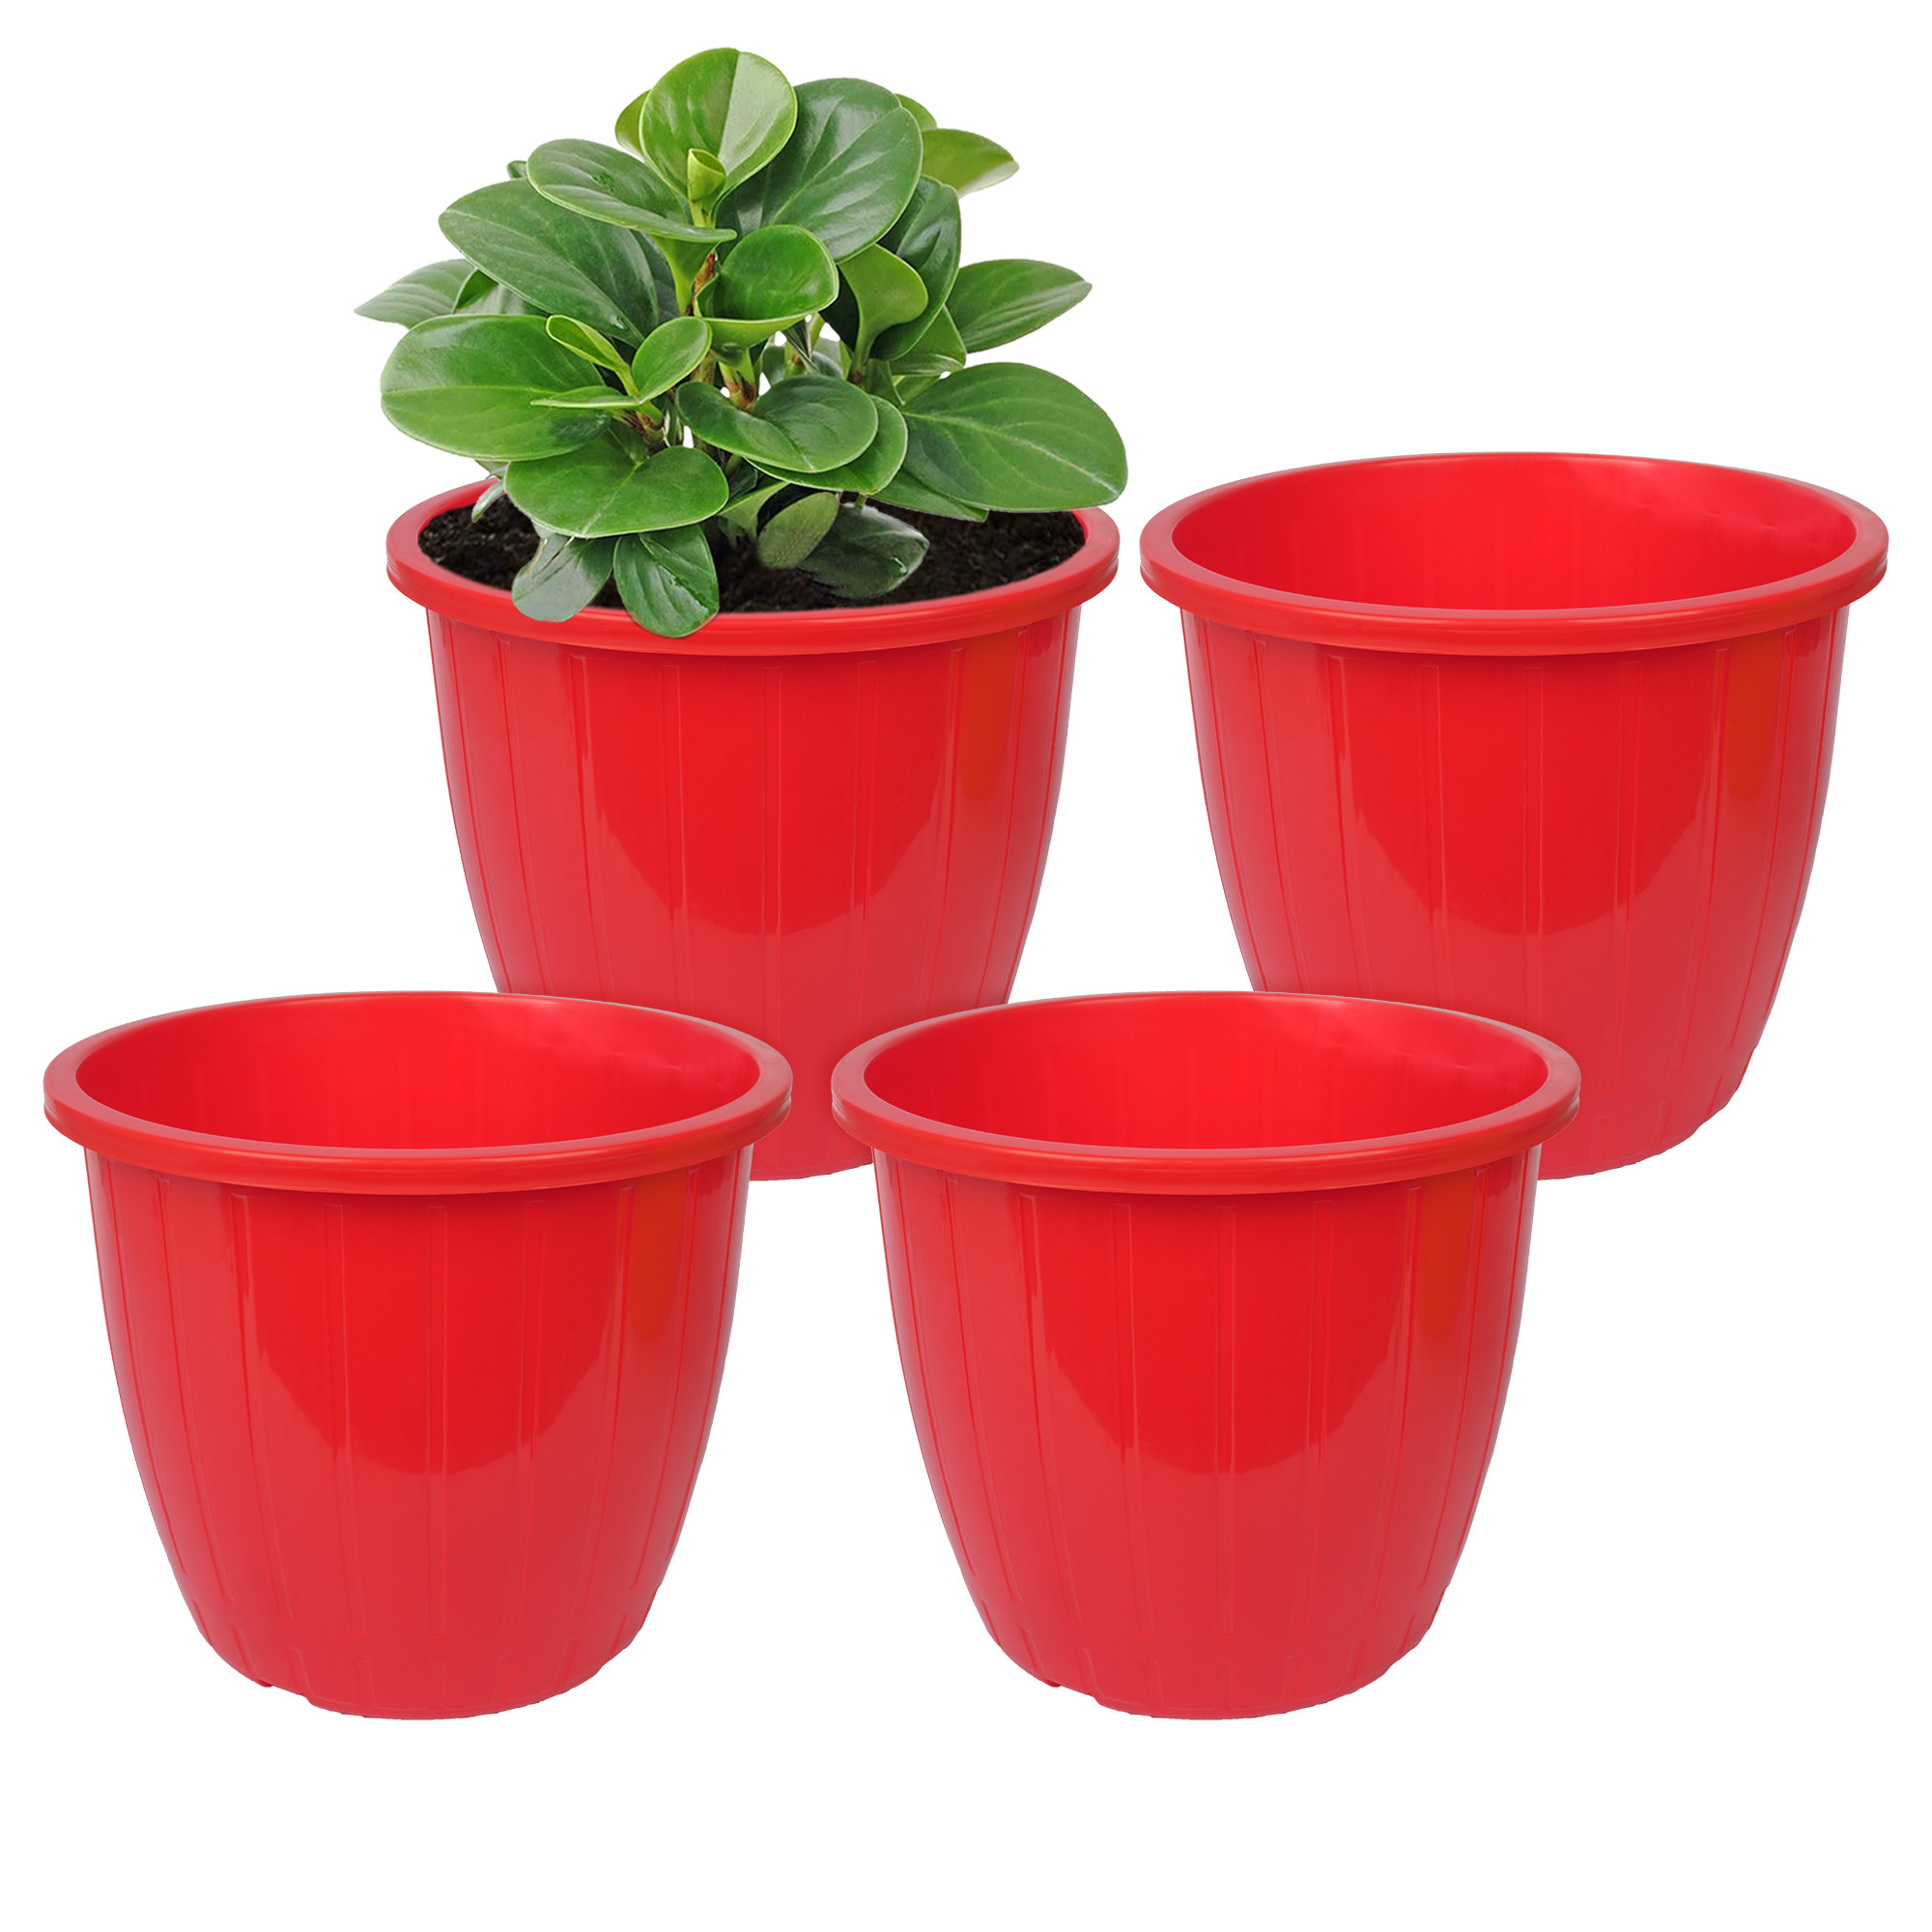 Kuber Industries Flower Pot | Flower Pots for Indoor & Outdoor | Plastic Pot for Gardening | Planter for Flower | Balcony Flower Pot with Drain Holes | Duro Flower Pot | 6 Inch |Red